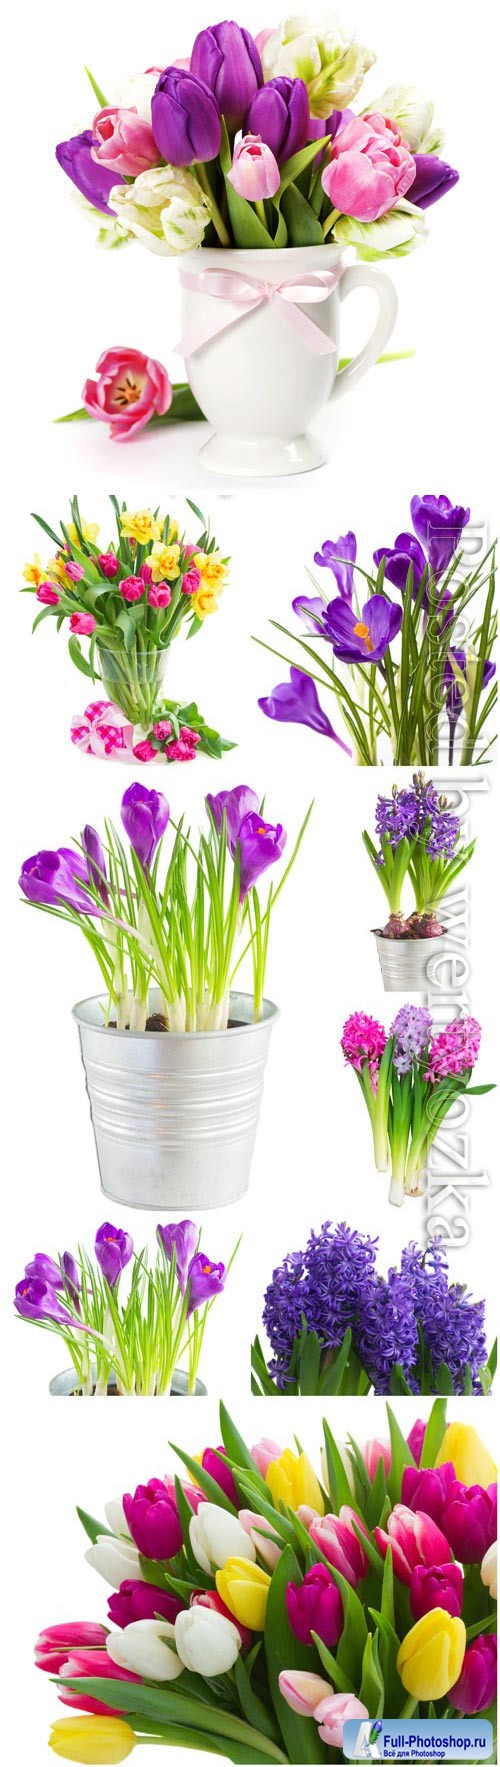 Hyacinths, crocuses and tulips stock photo